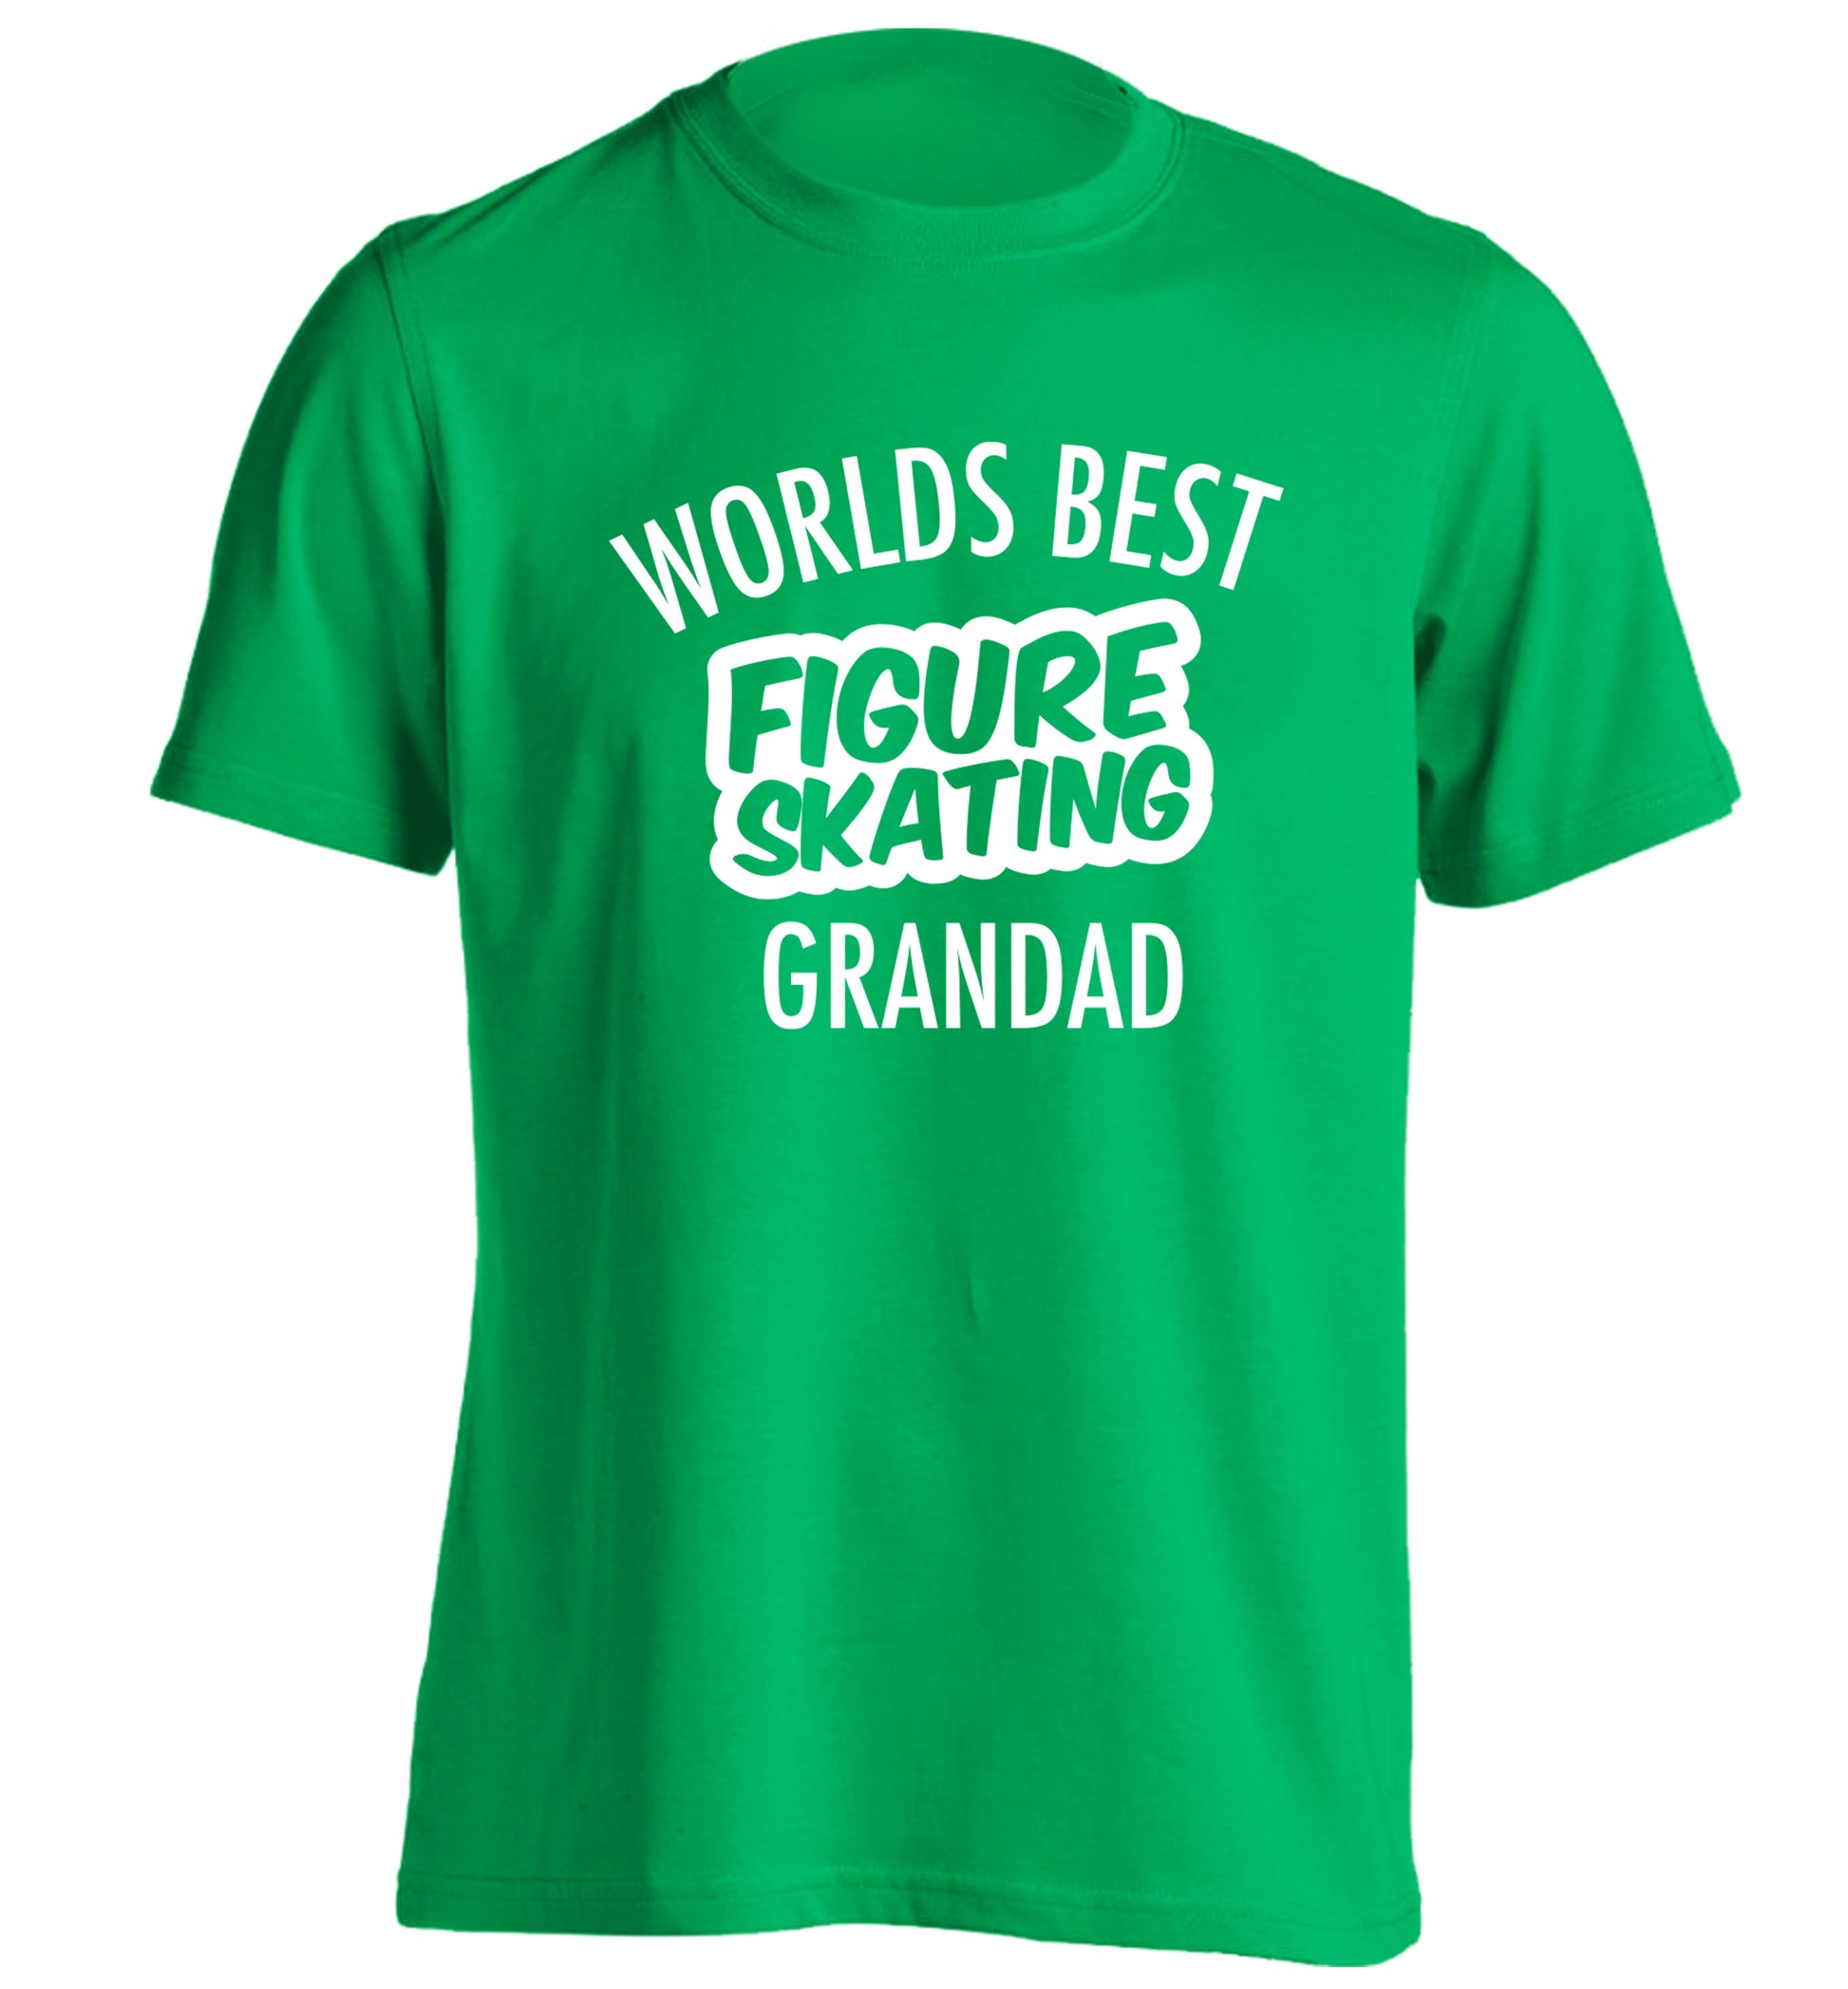 Worlds best figure skating grandad adults unisexgreen Tshirt 2XL